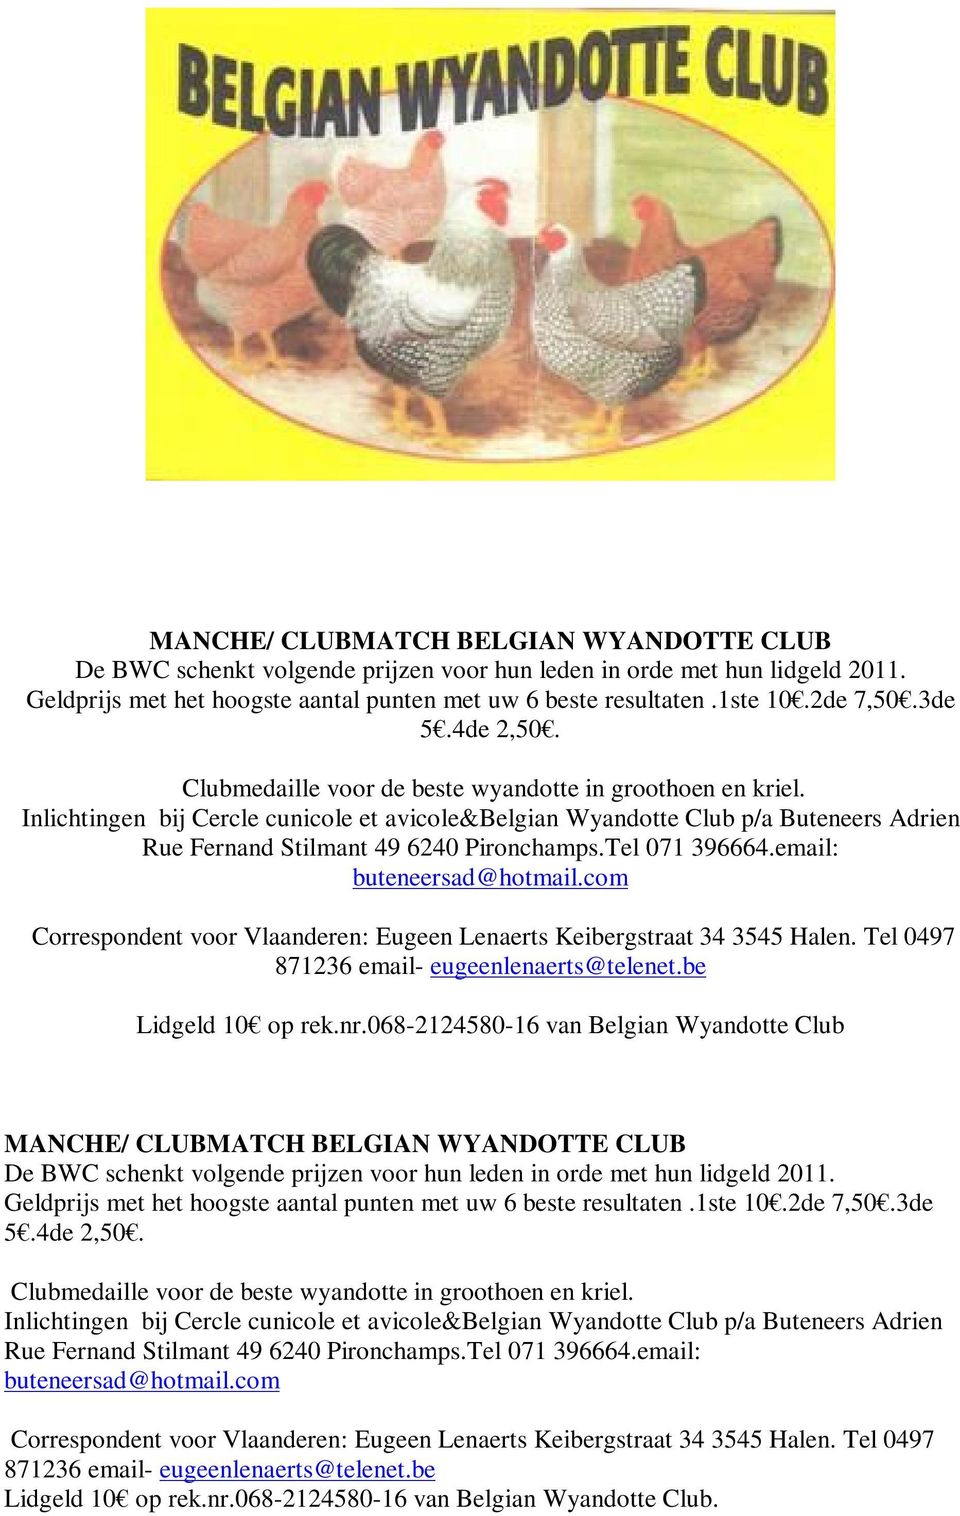 Inlichtingen bij Cercle cunicole et avicole&belgian Wyandotte Club p/a Buteneers Adrien Rue Fernand Stilmant 49 6240 Pironchamps.Tel 071 396664.email: buteneersad@hotmail.